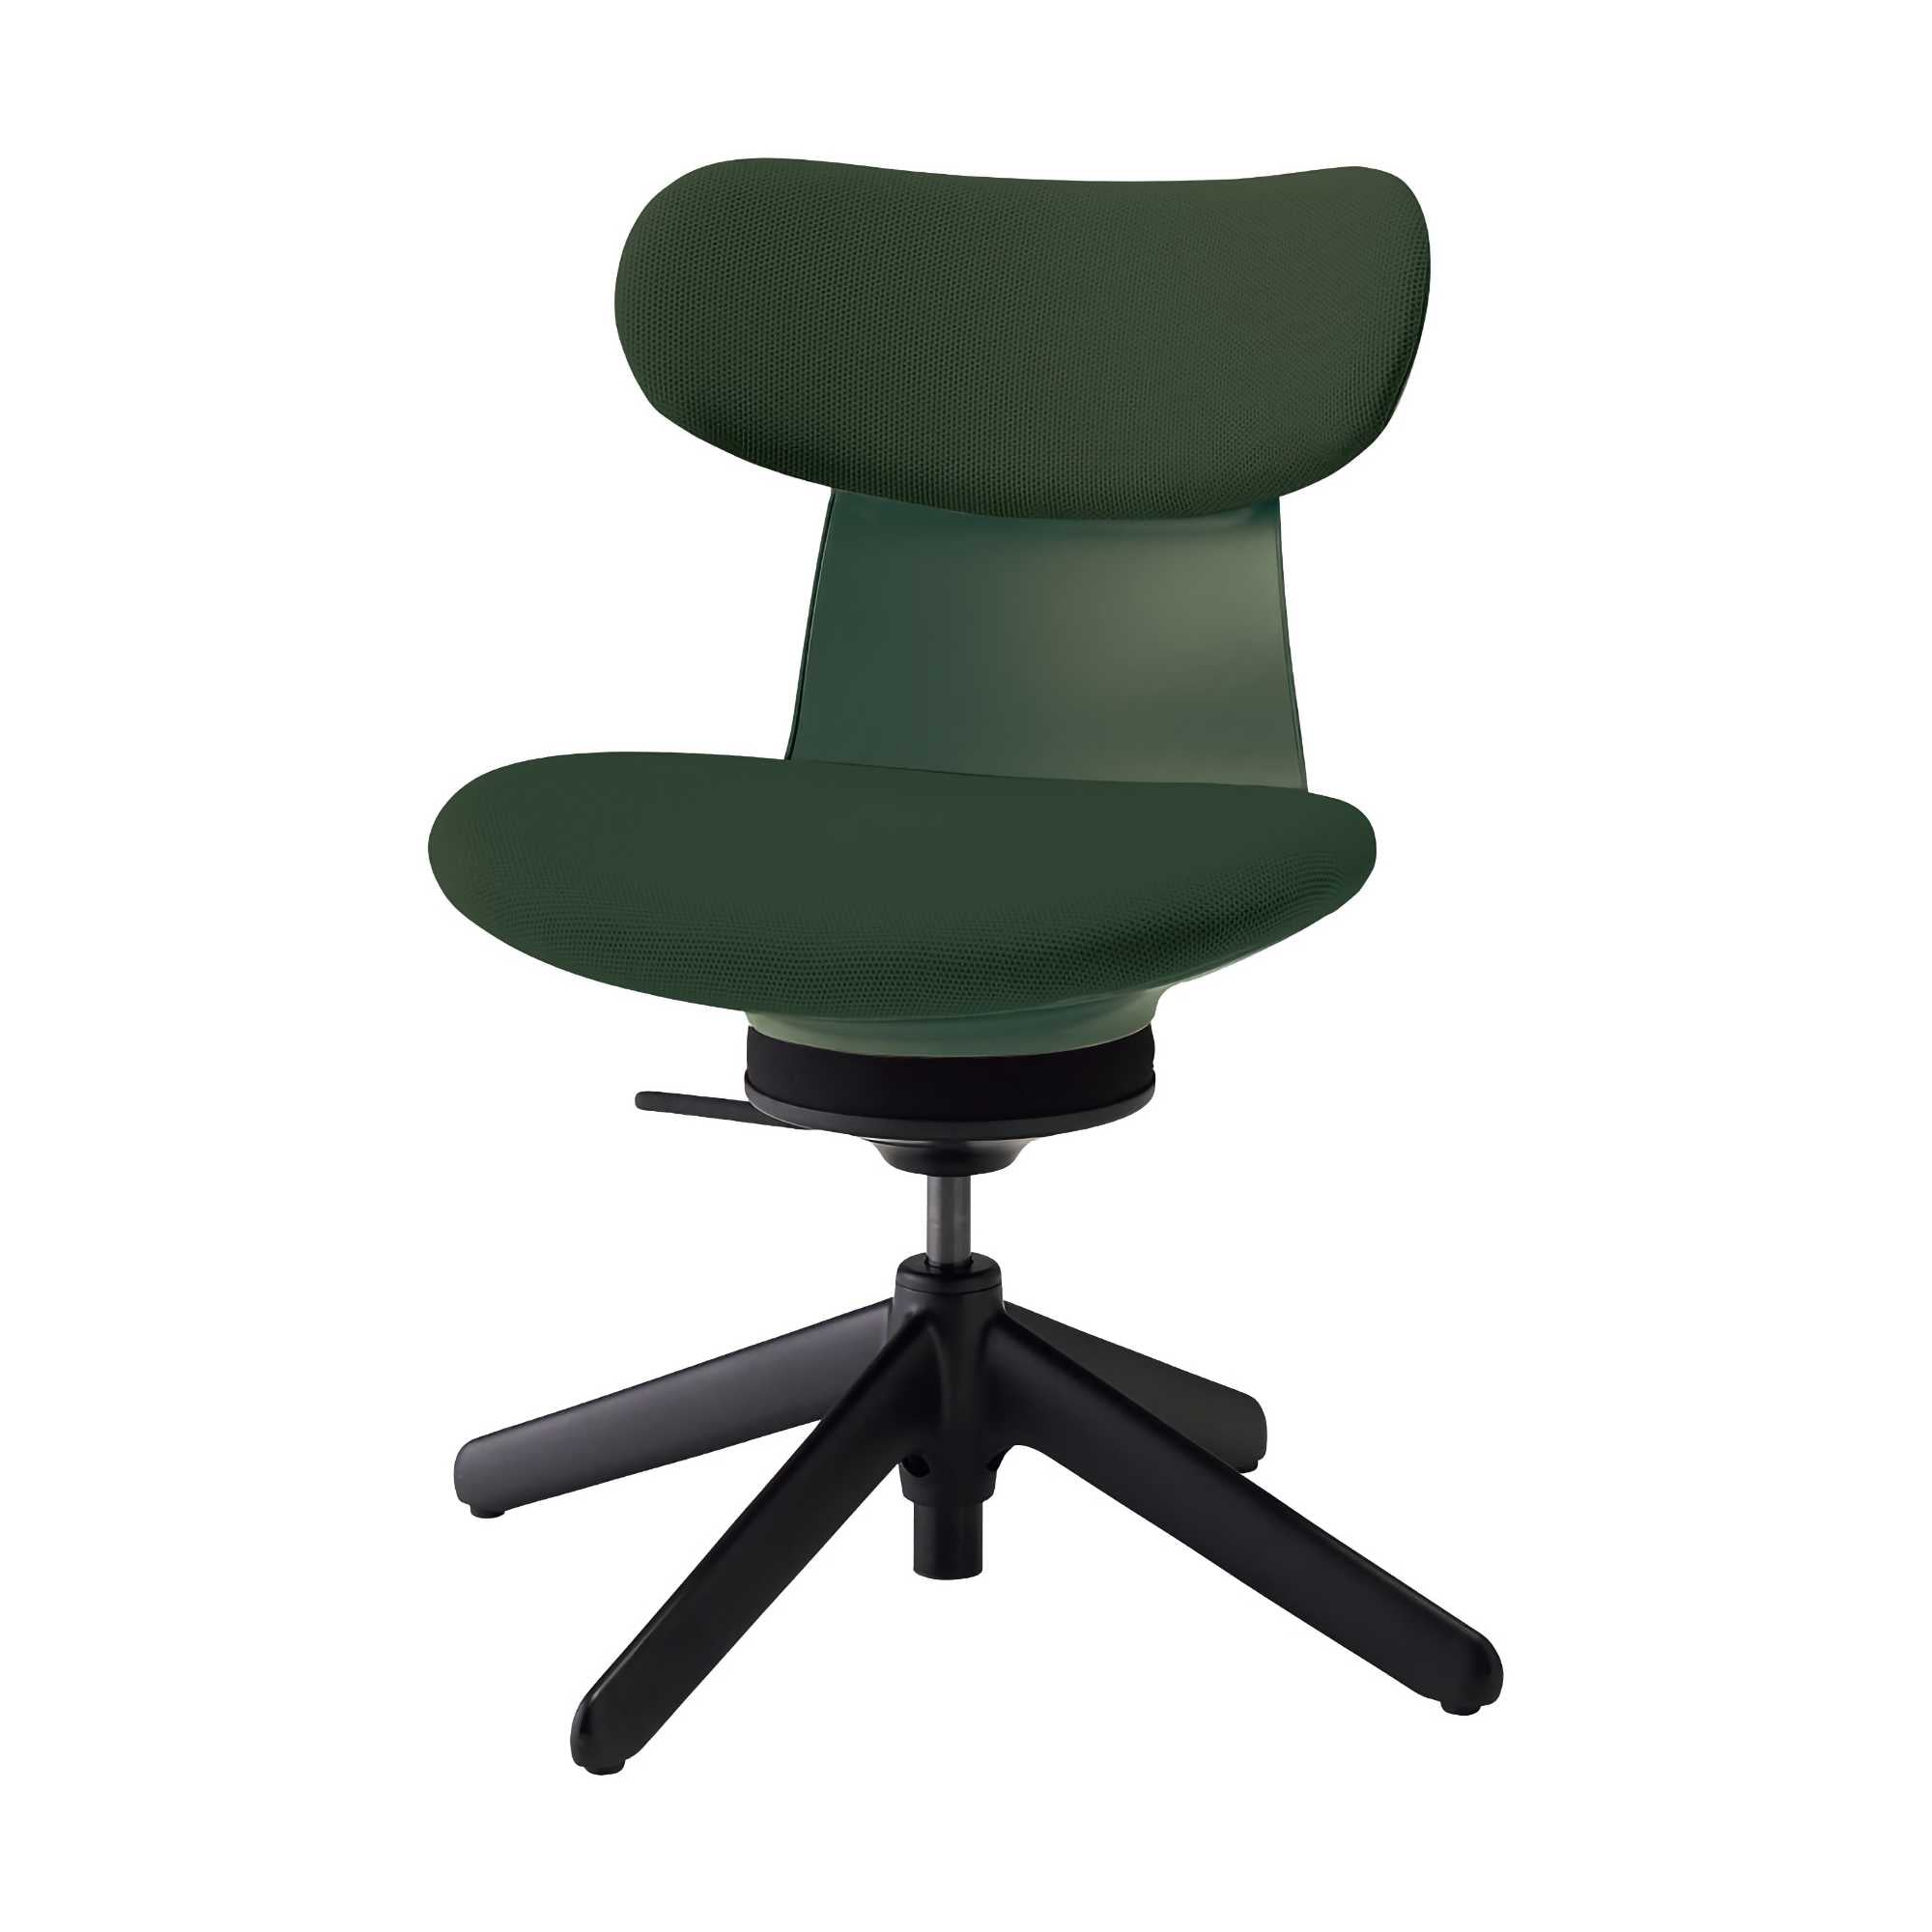 Kokuyo Inglife Office Chair Upholstery Back, green